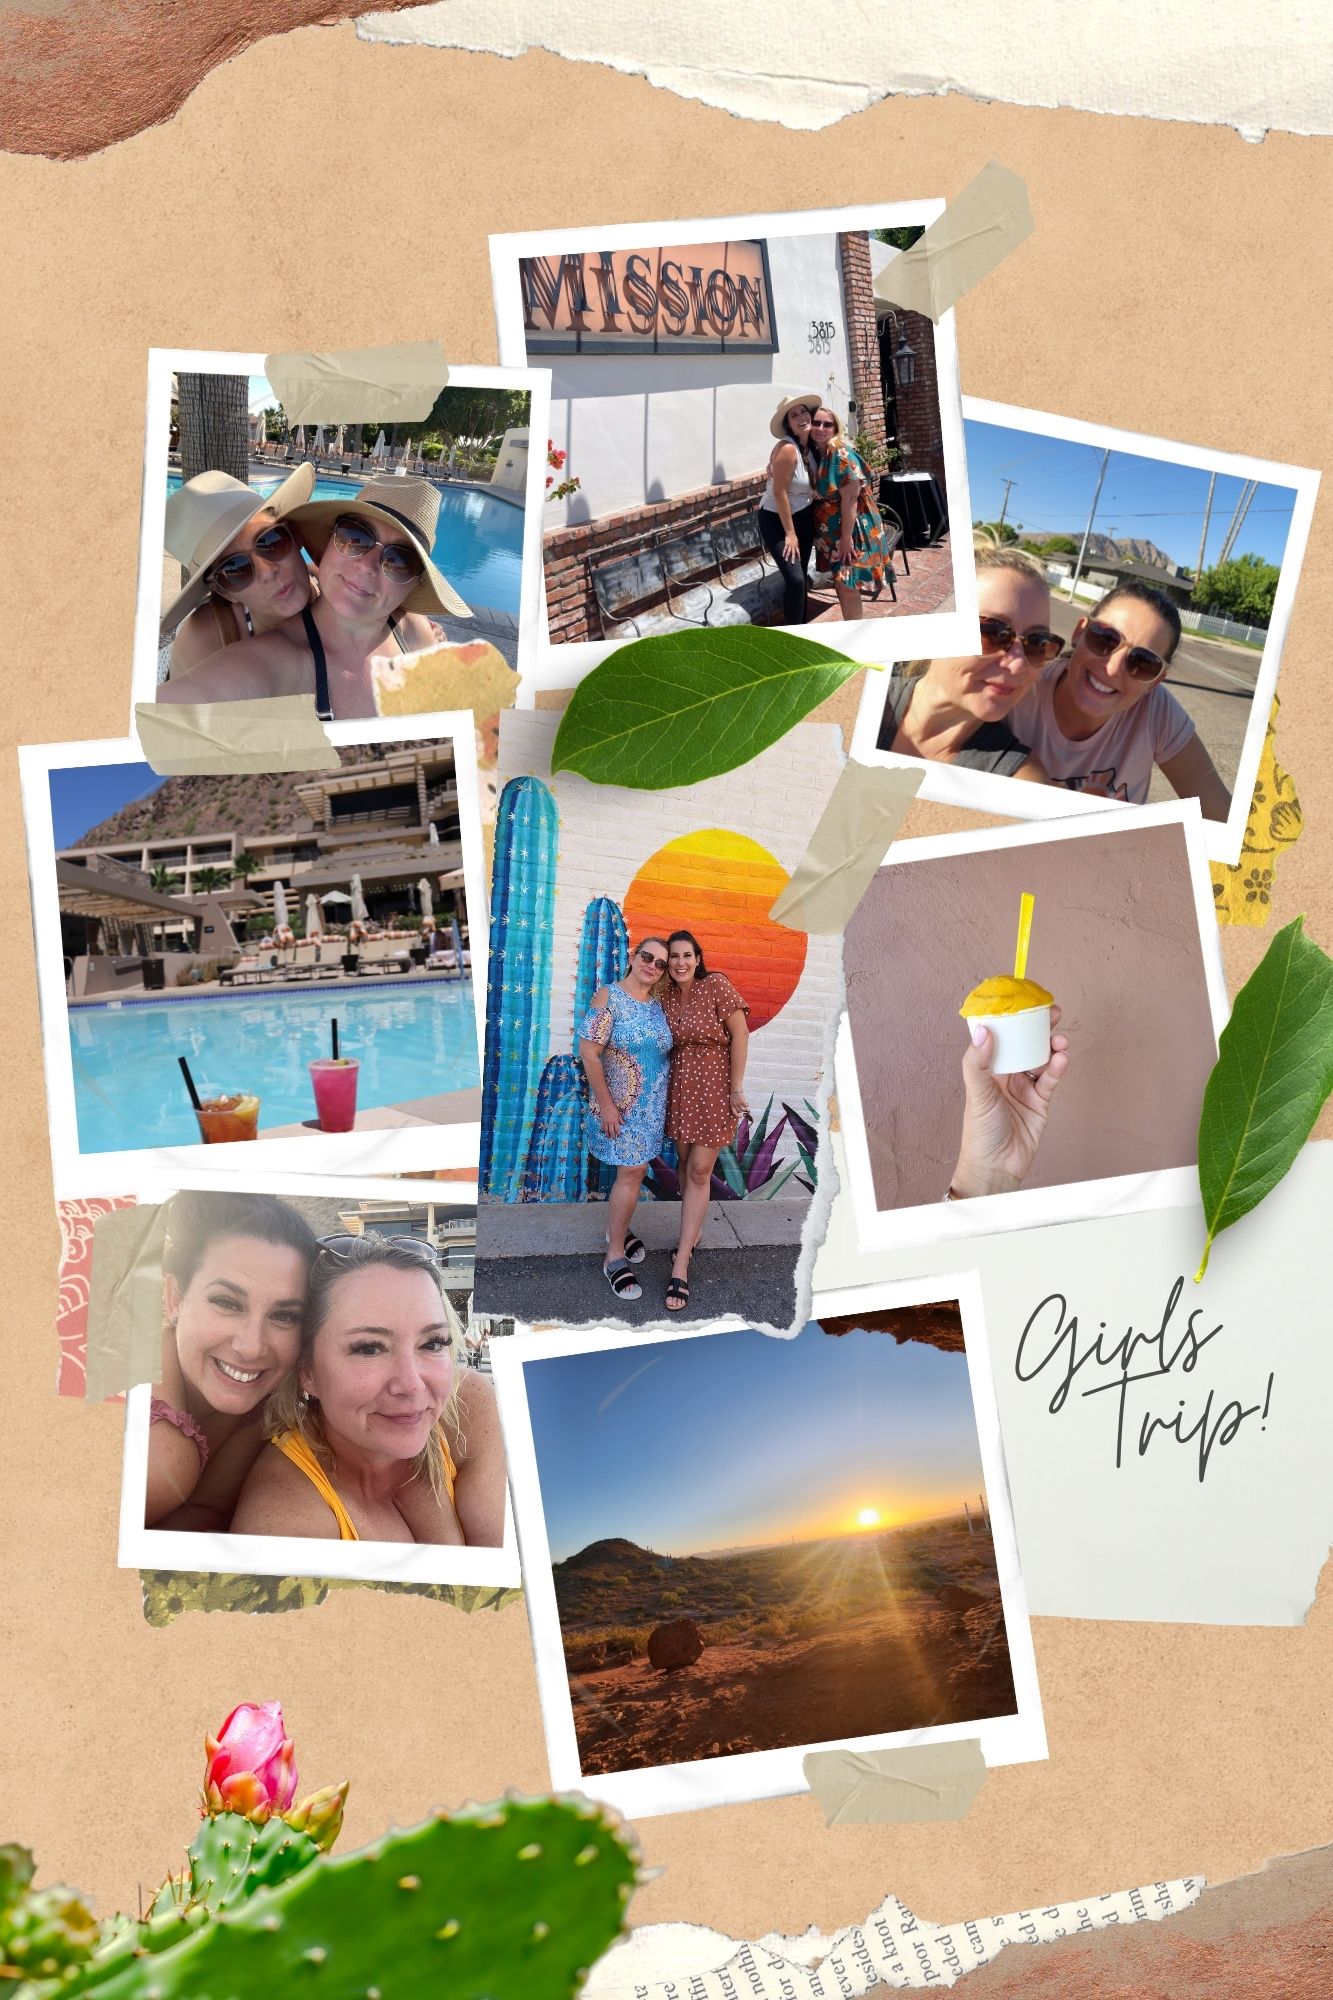 Scottsdale Girls Trip: AZ Travel Guide for an Epic Girls Getaway!